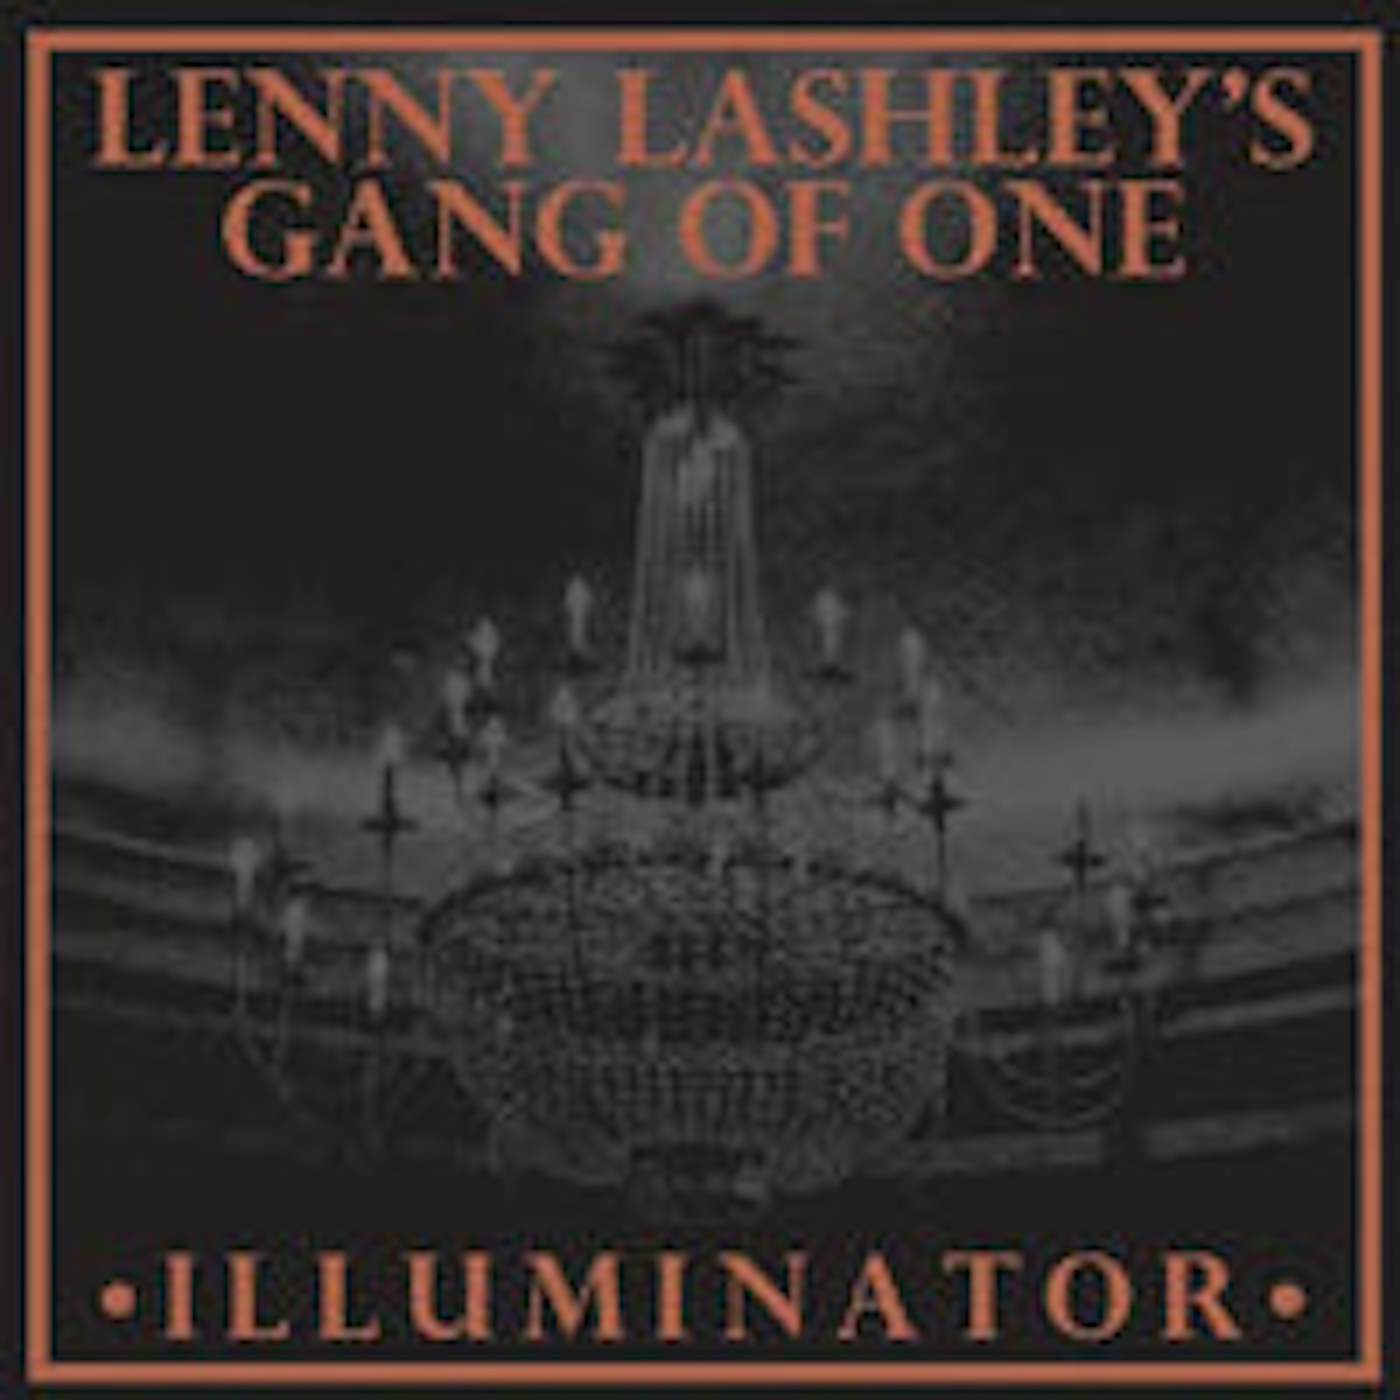 Lenny Lashley'S Gang Of One LP - Illuminator (Red/Orange Galaxy Vinyl)